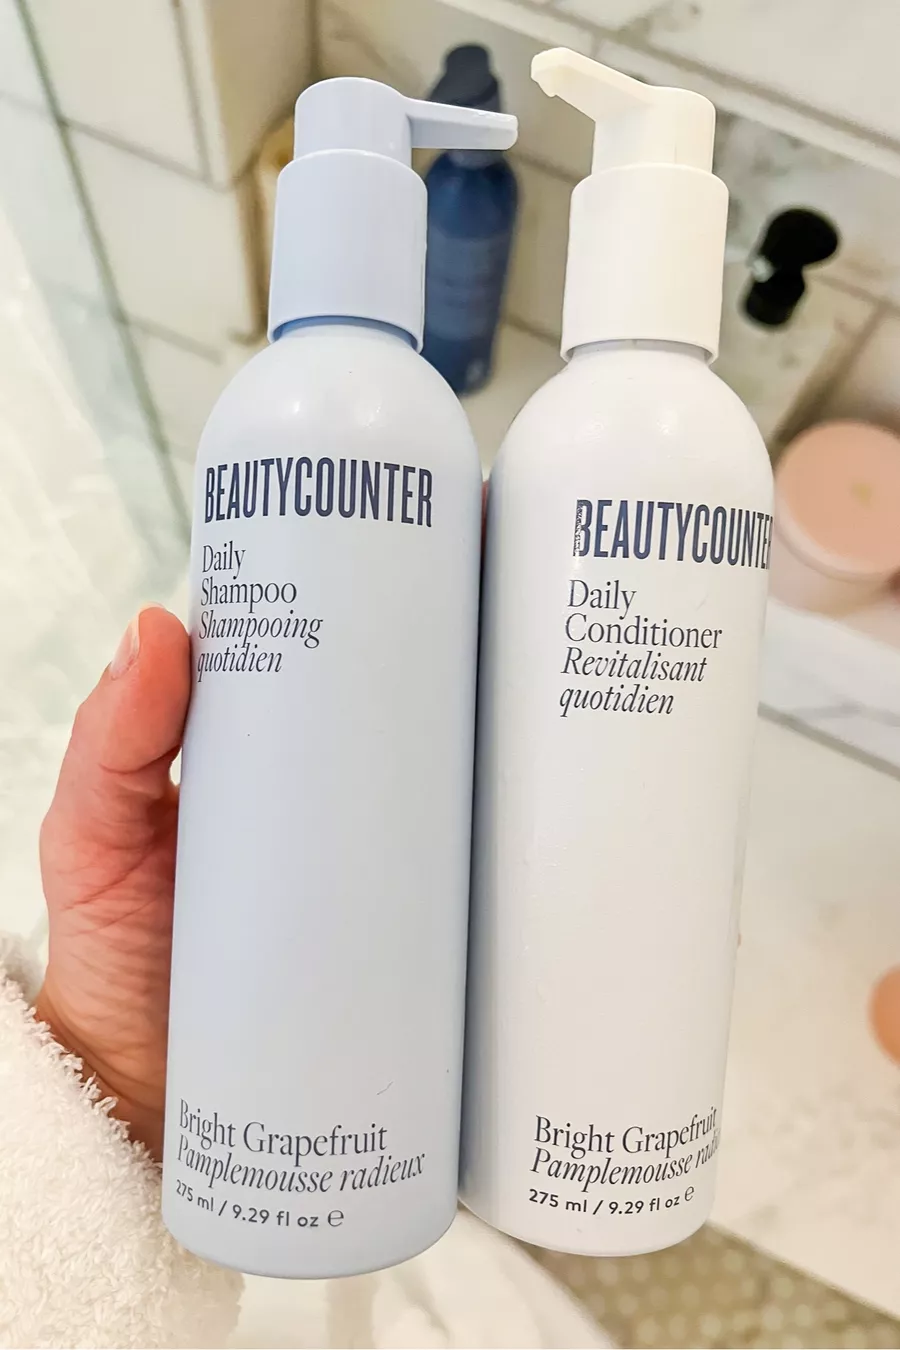 Beautycounter shampoo and conditioner